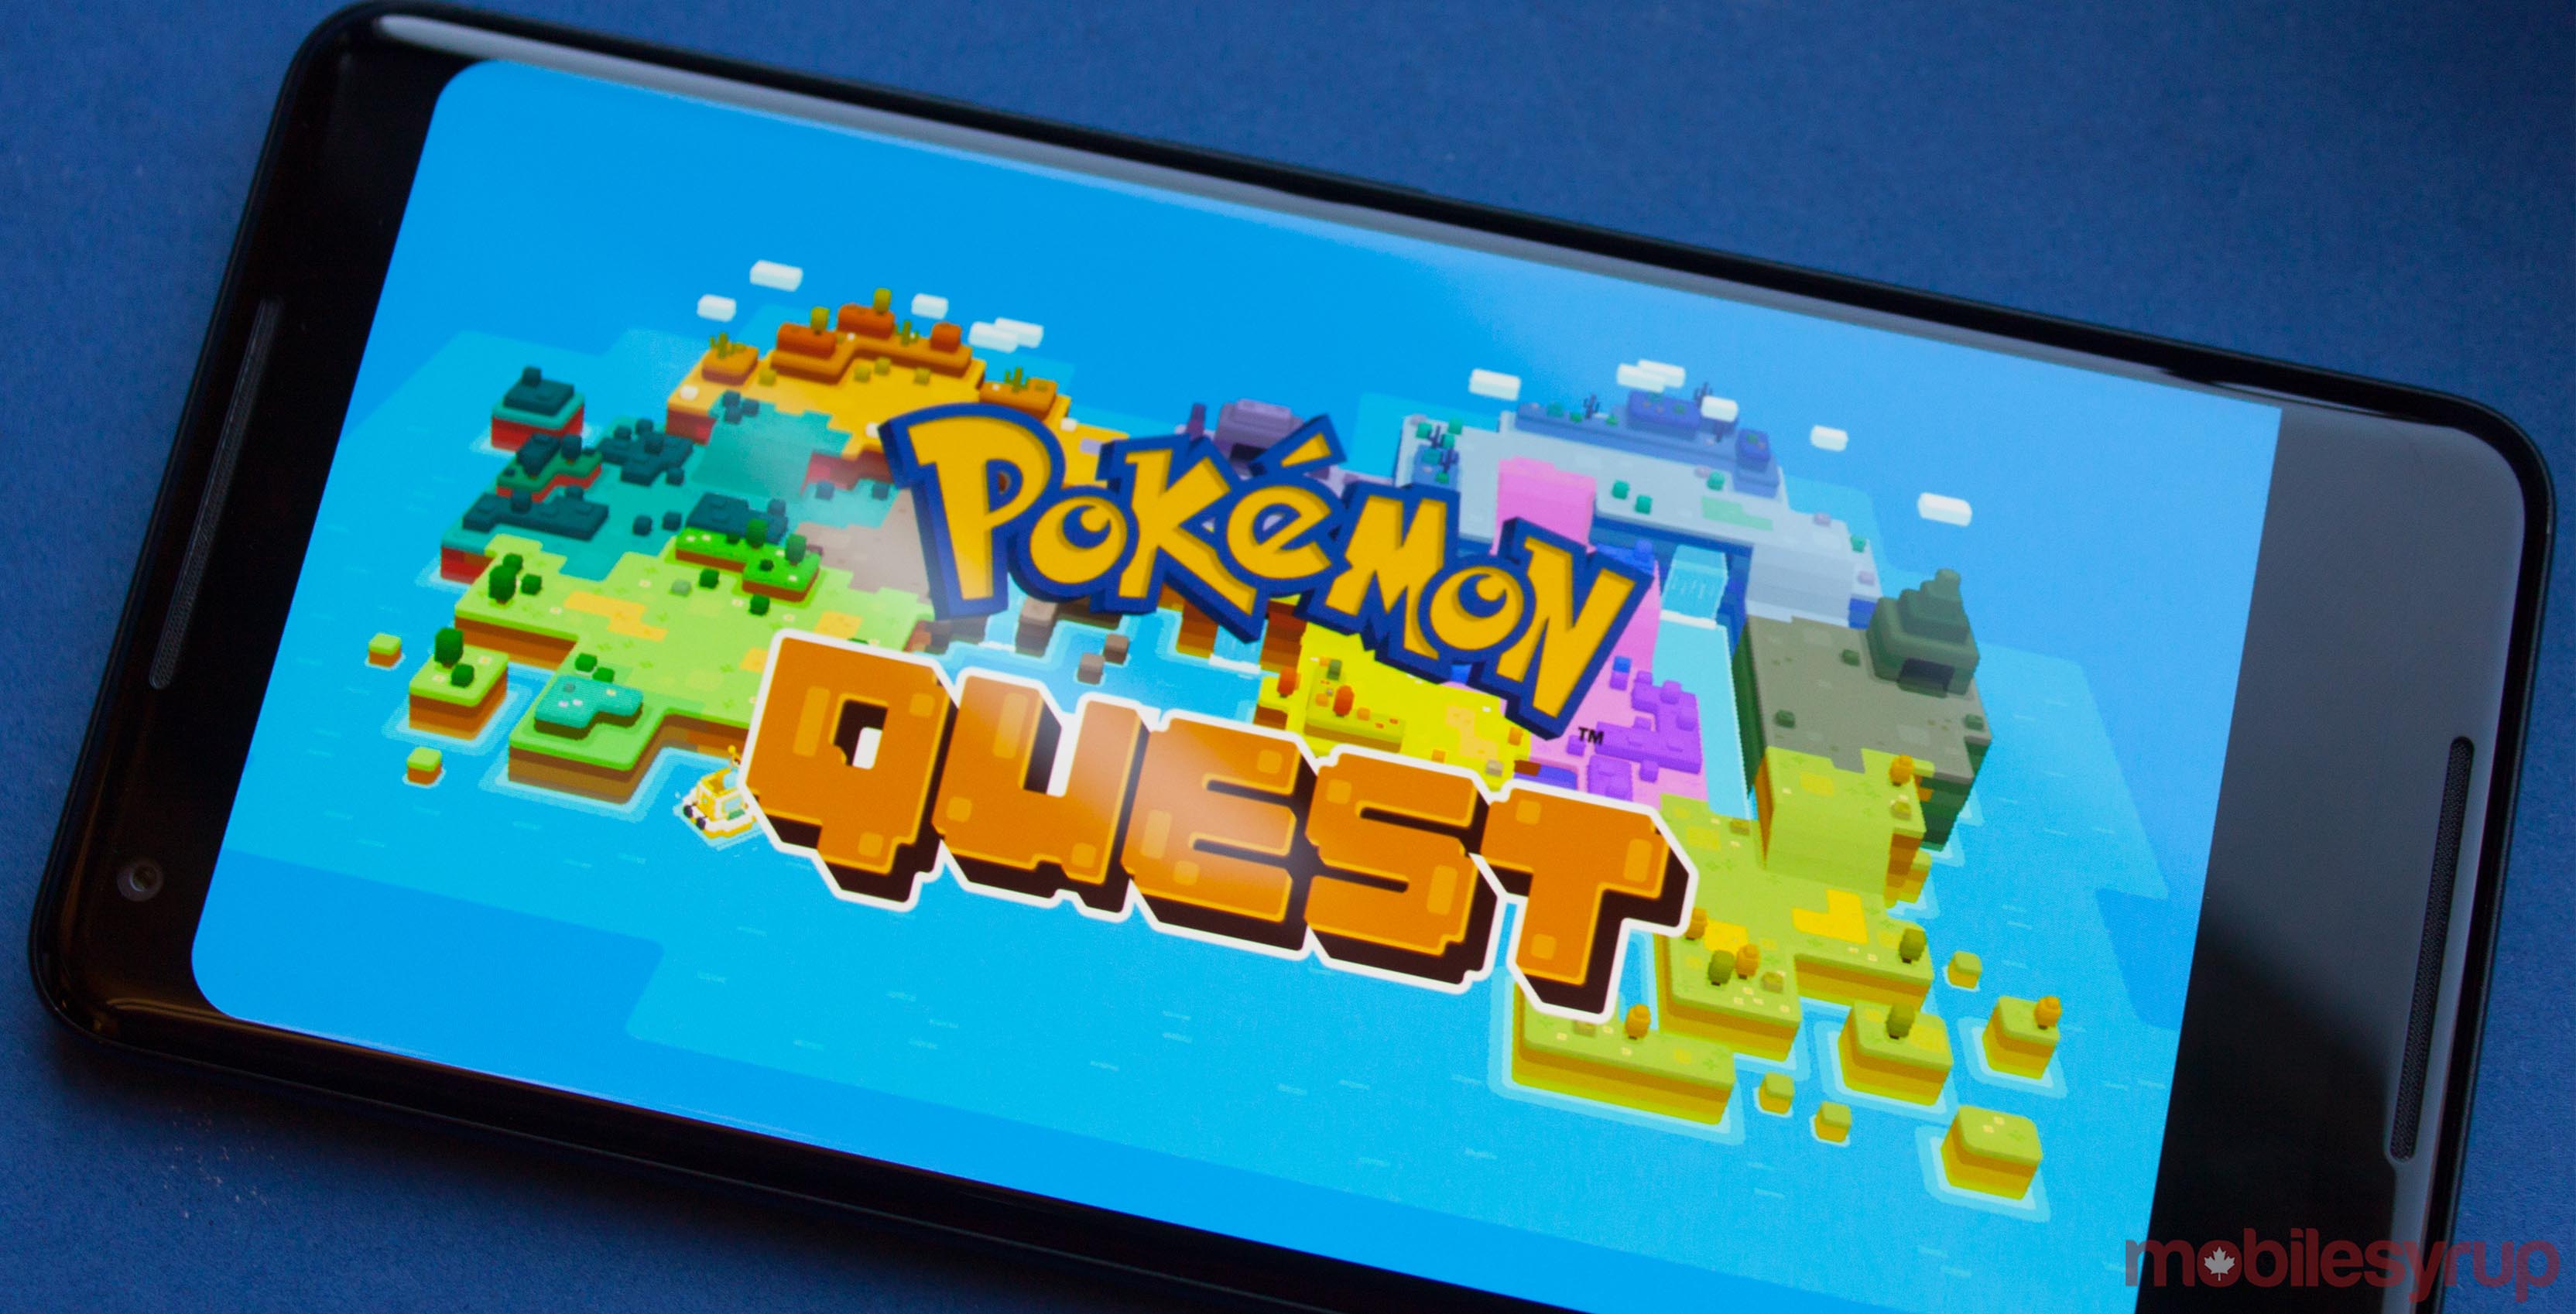 Pokemon Quest title screen